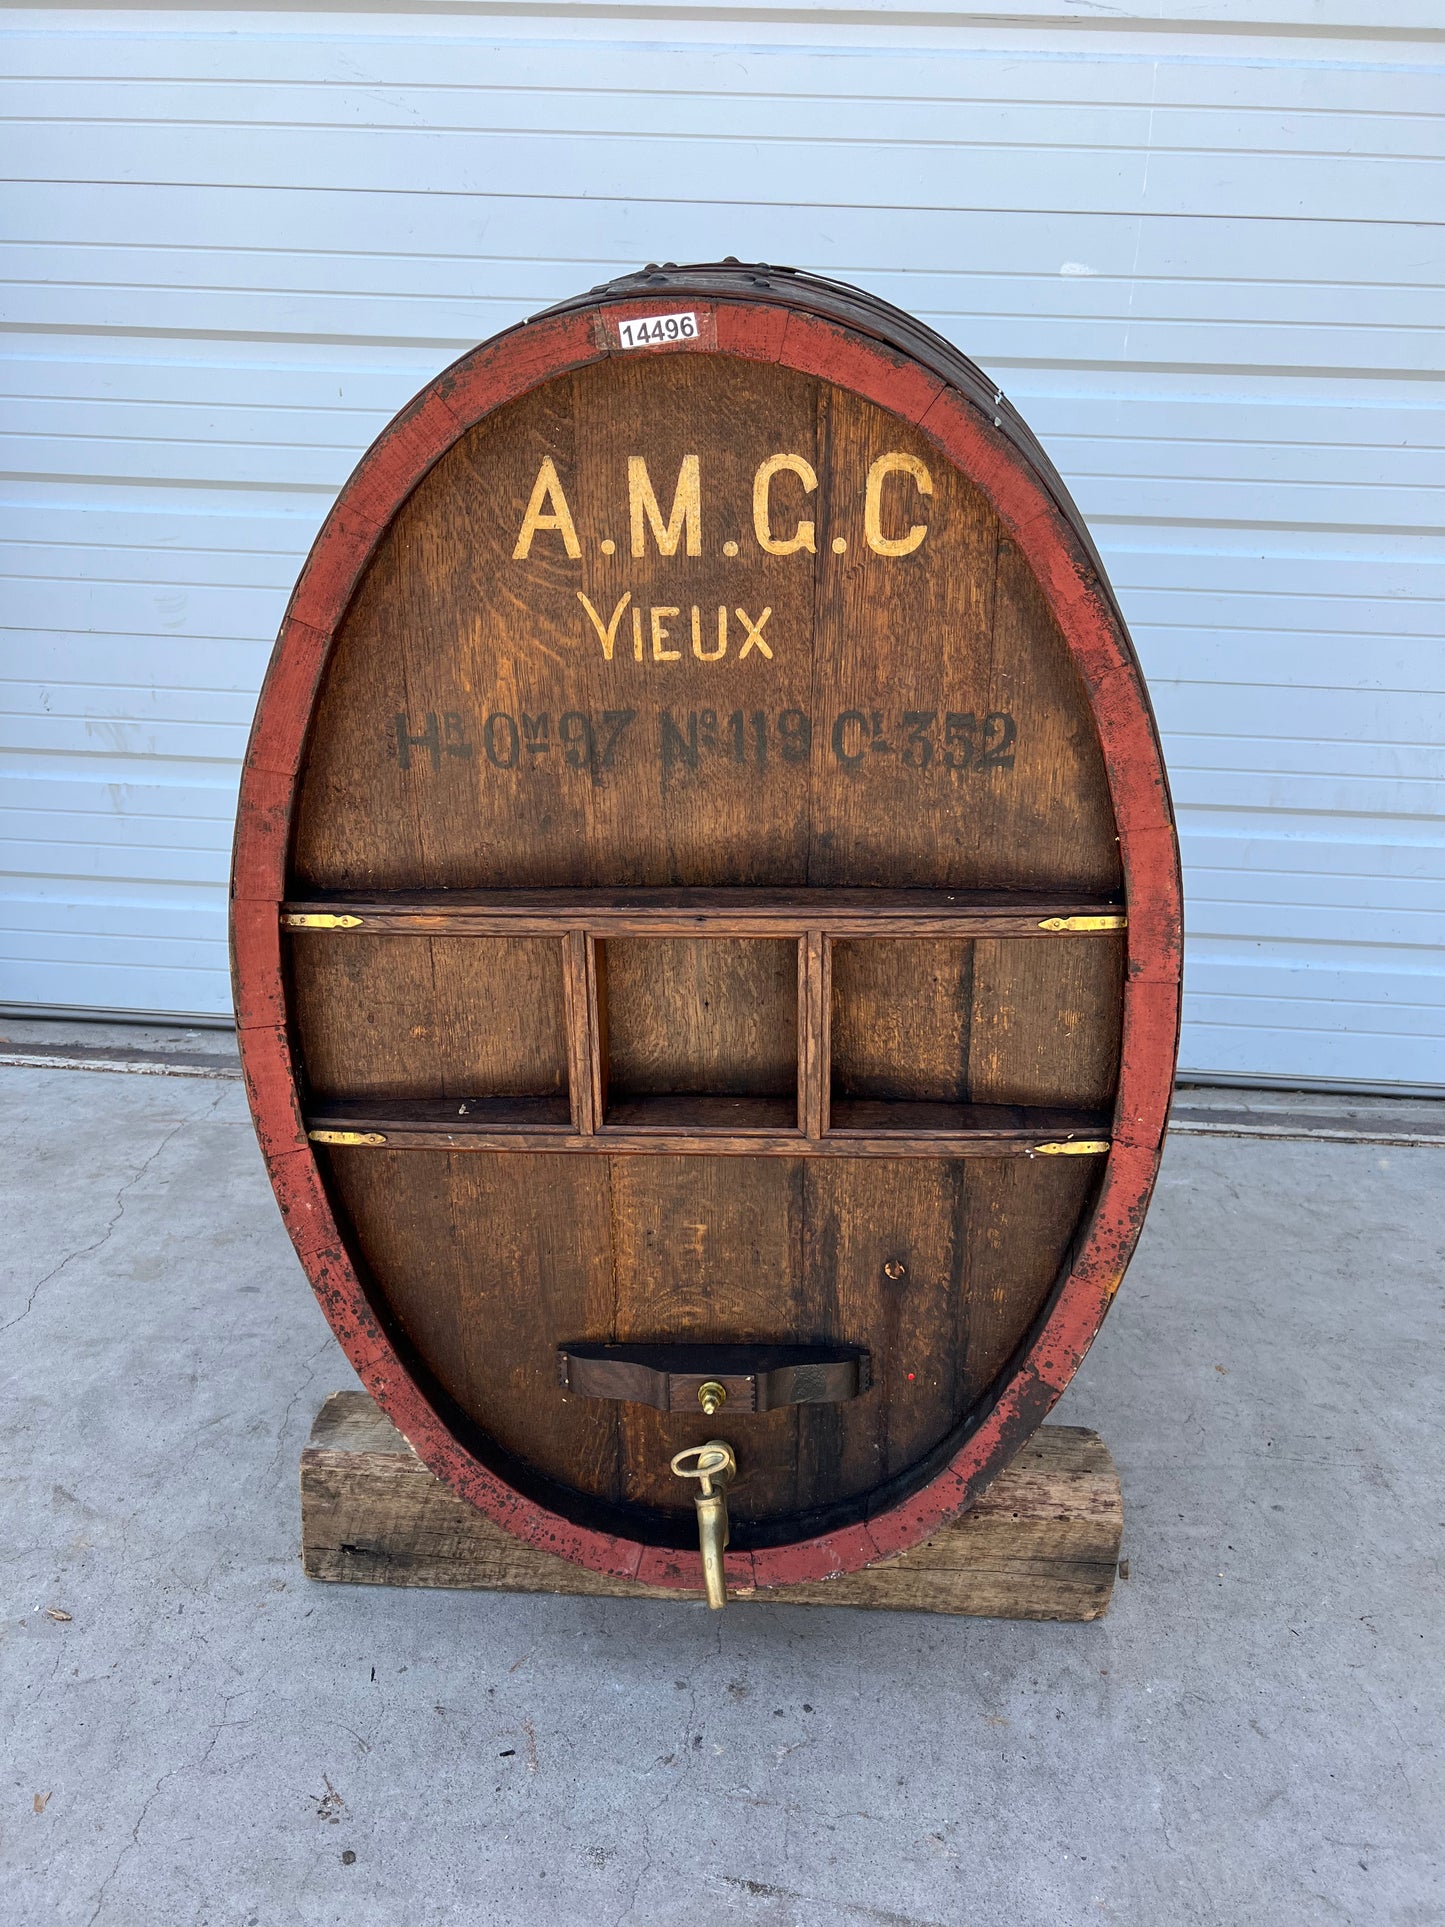 French Wine Barrel "A.M.G.C. Vieux"